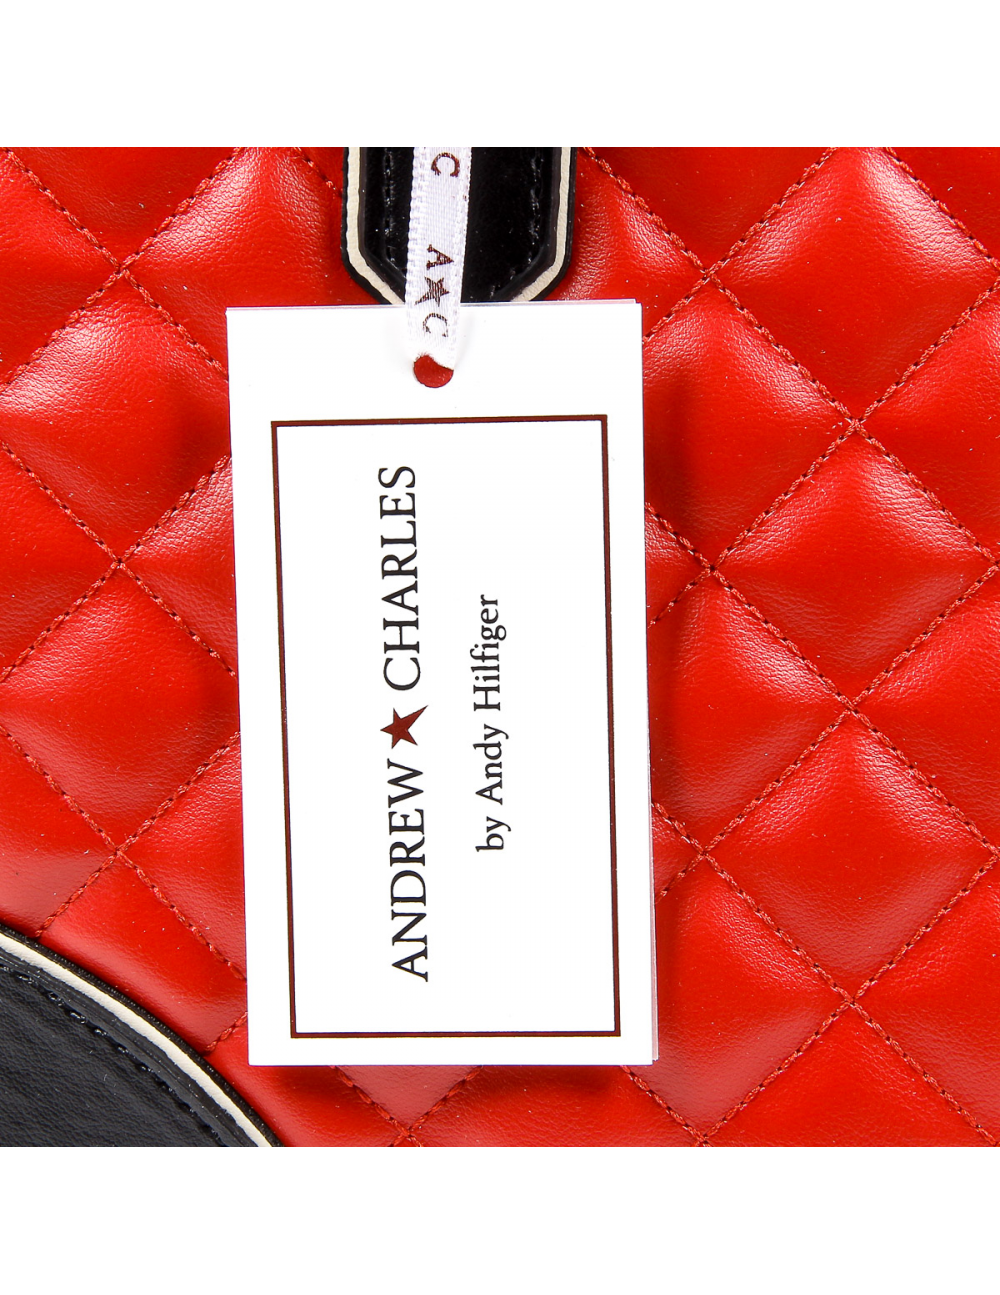 Andrew Charles Womens Handbag Red LILLI - YuppyCollections